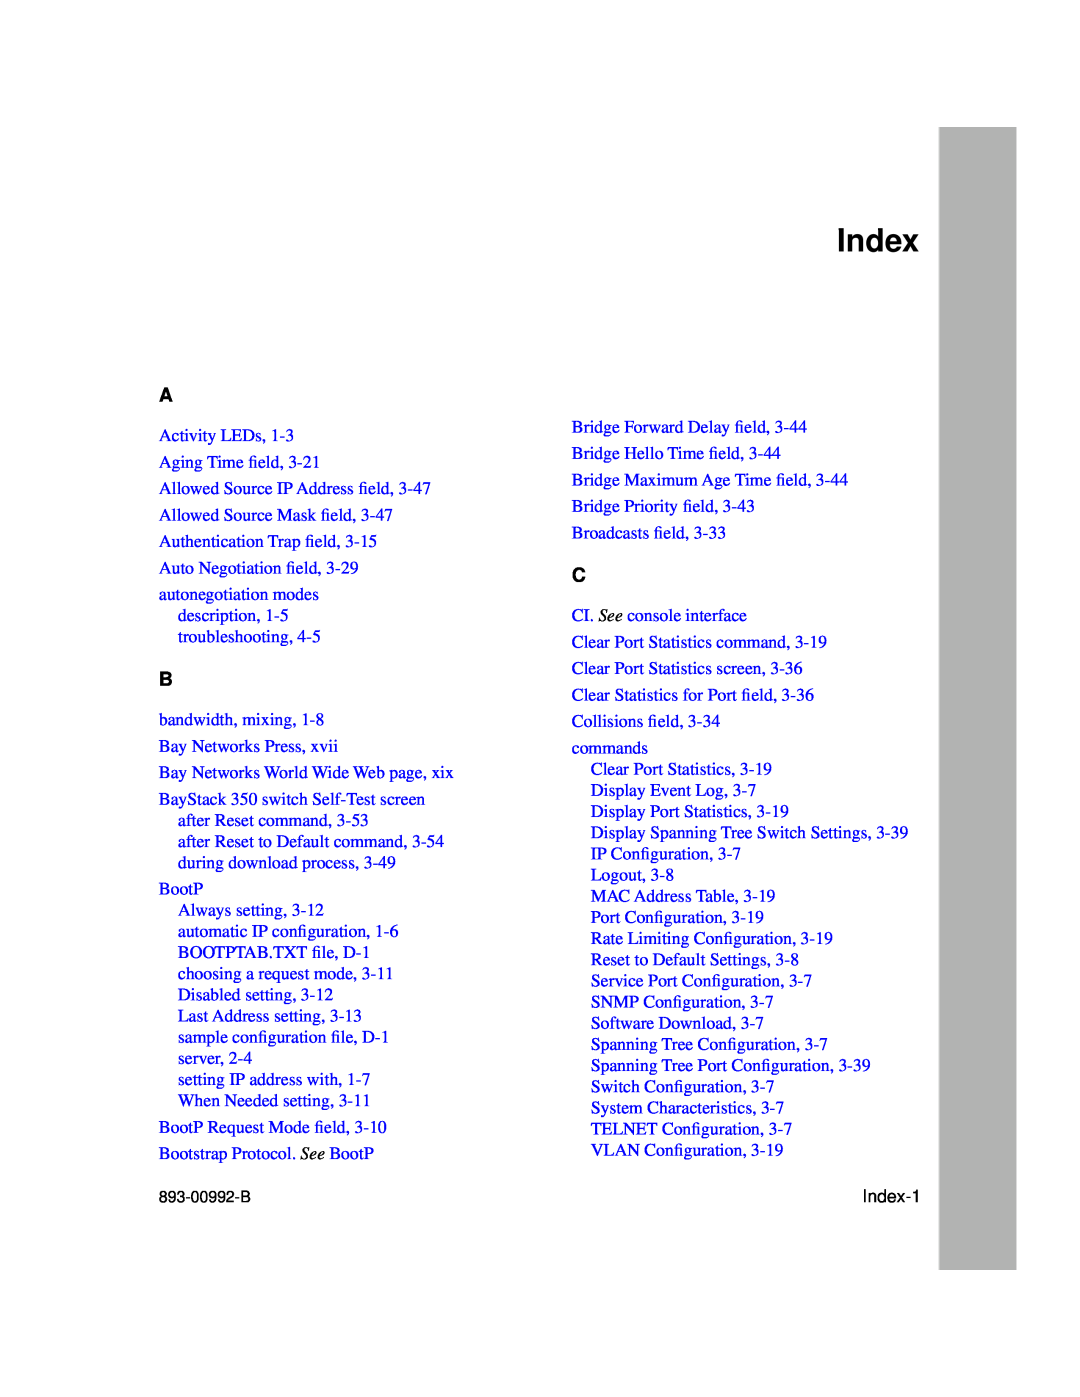 Bay Technical Associates 350 manual Index 